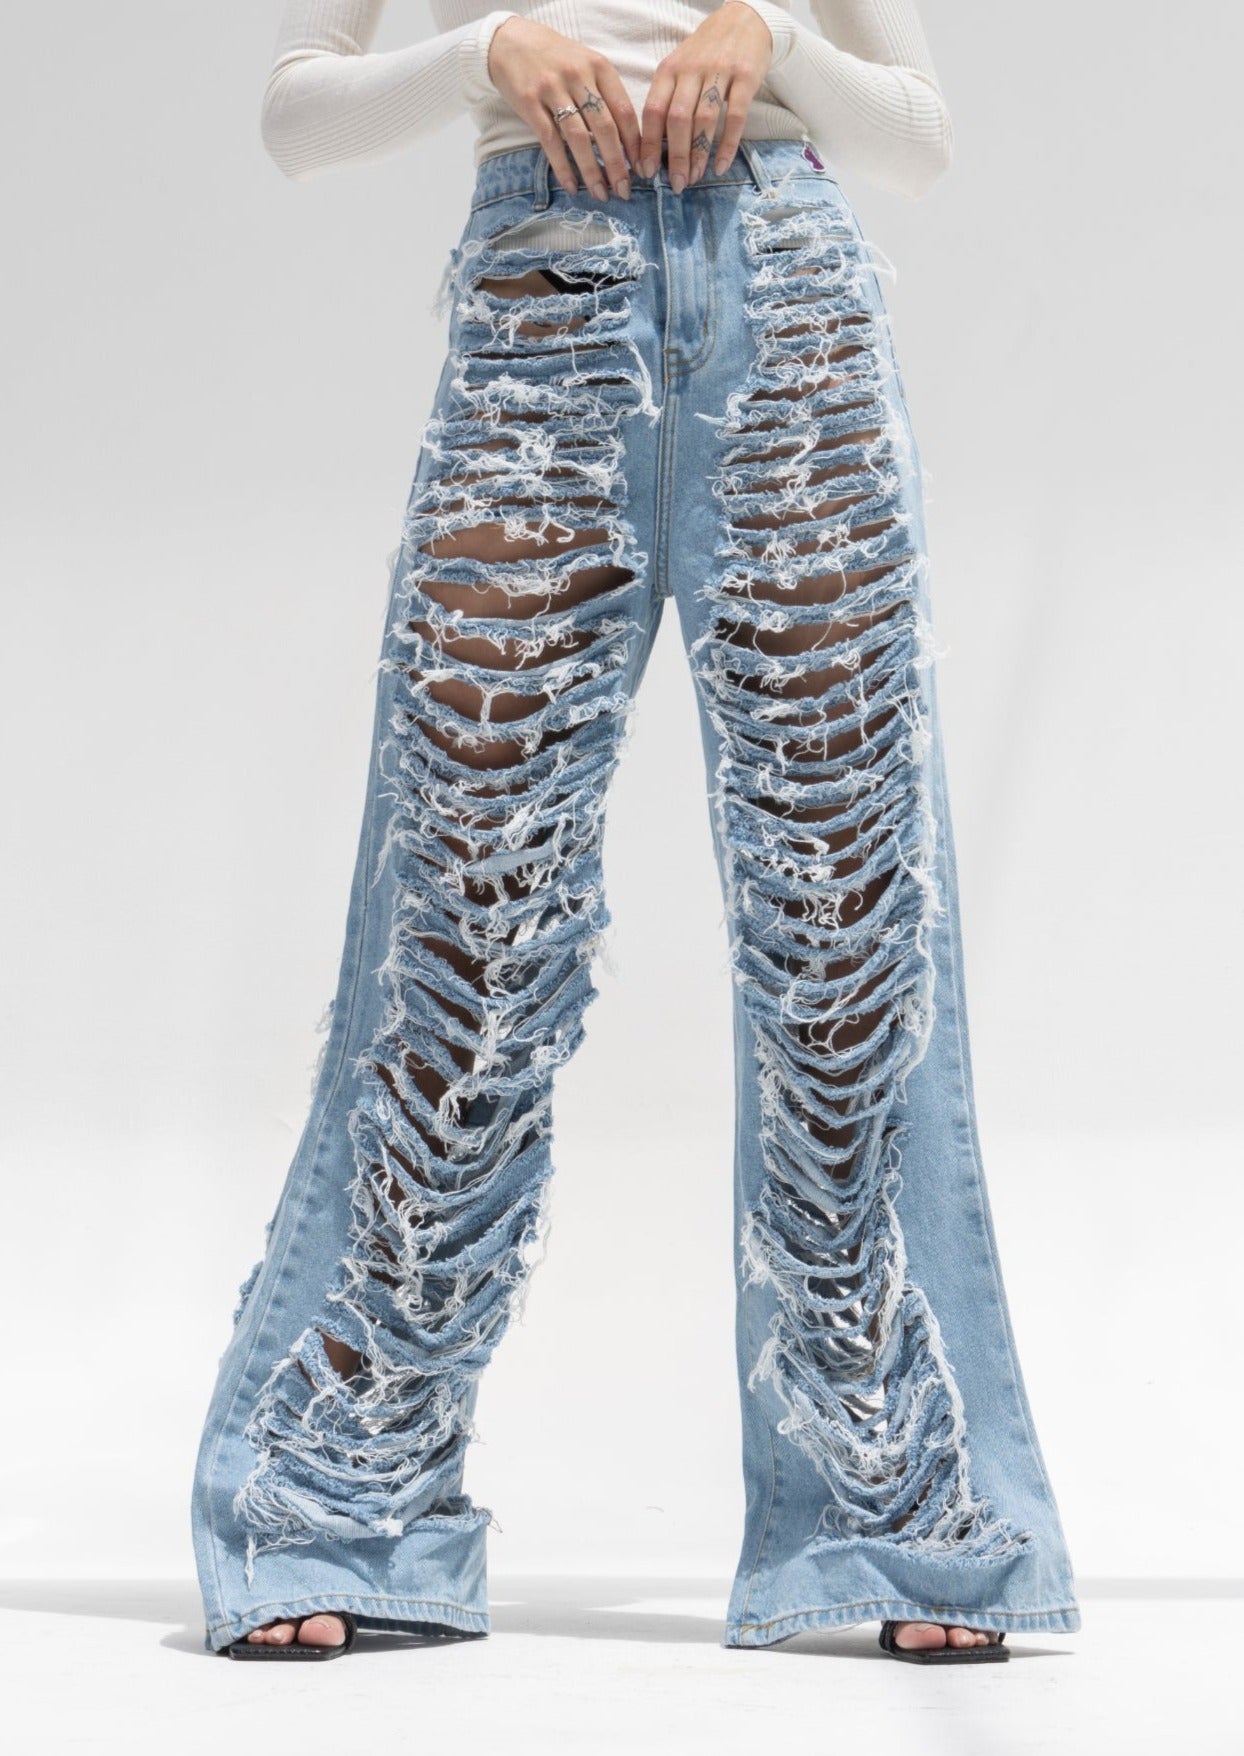 Medium Wash Denim Jeans - Distressed Denim Pants - Low Rise Denim Jeans